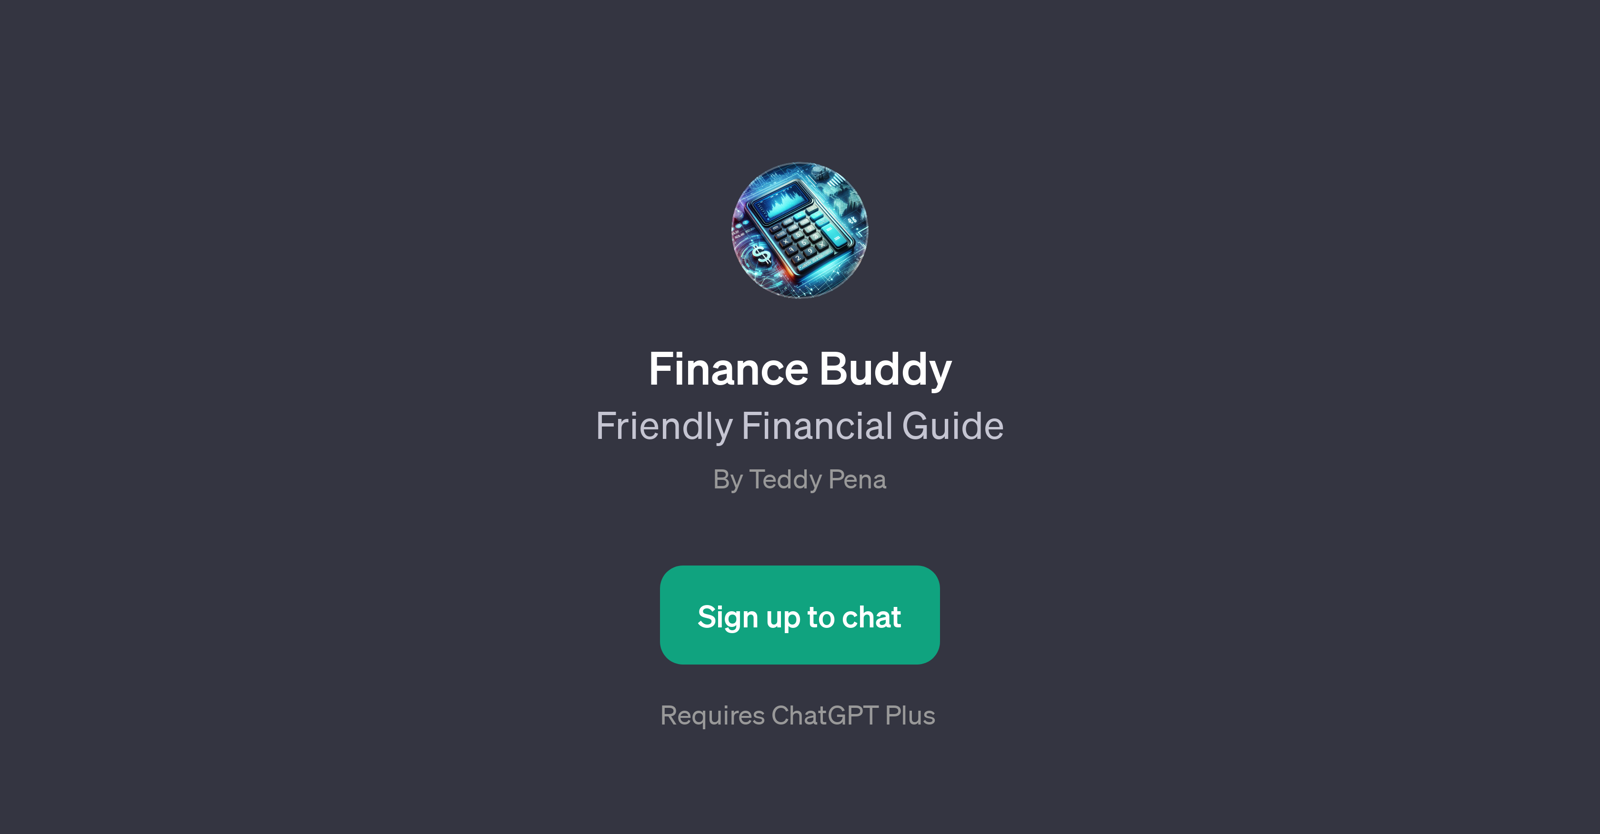 Finance Buddy website